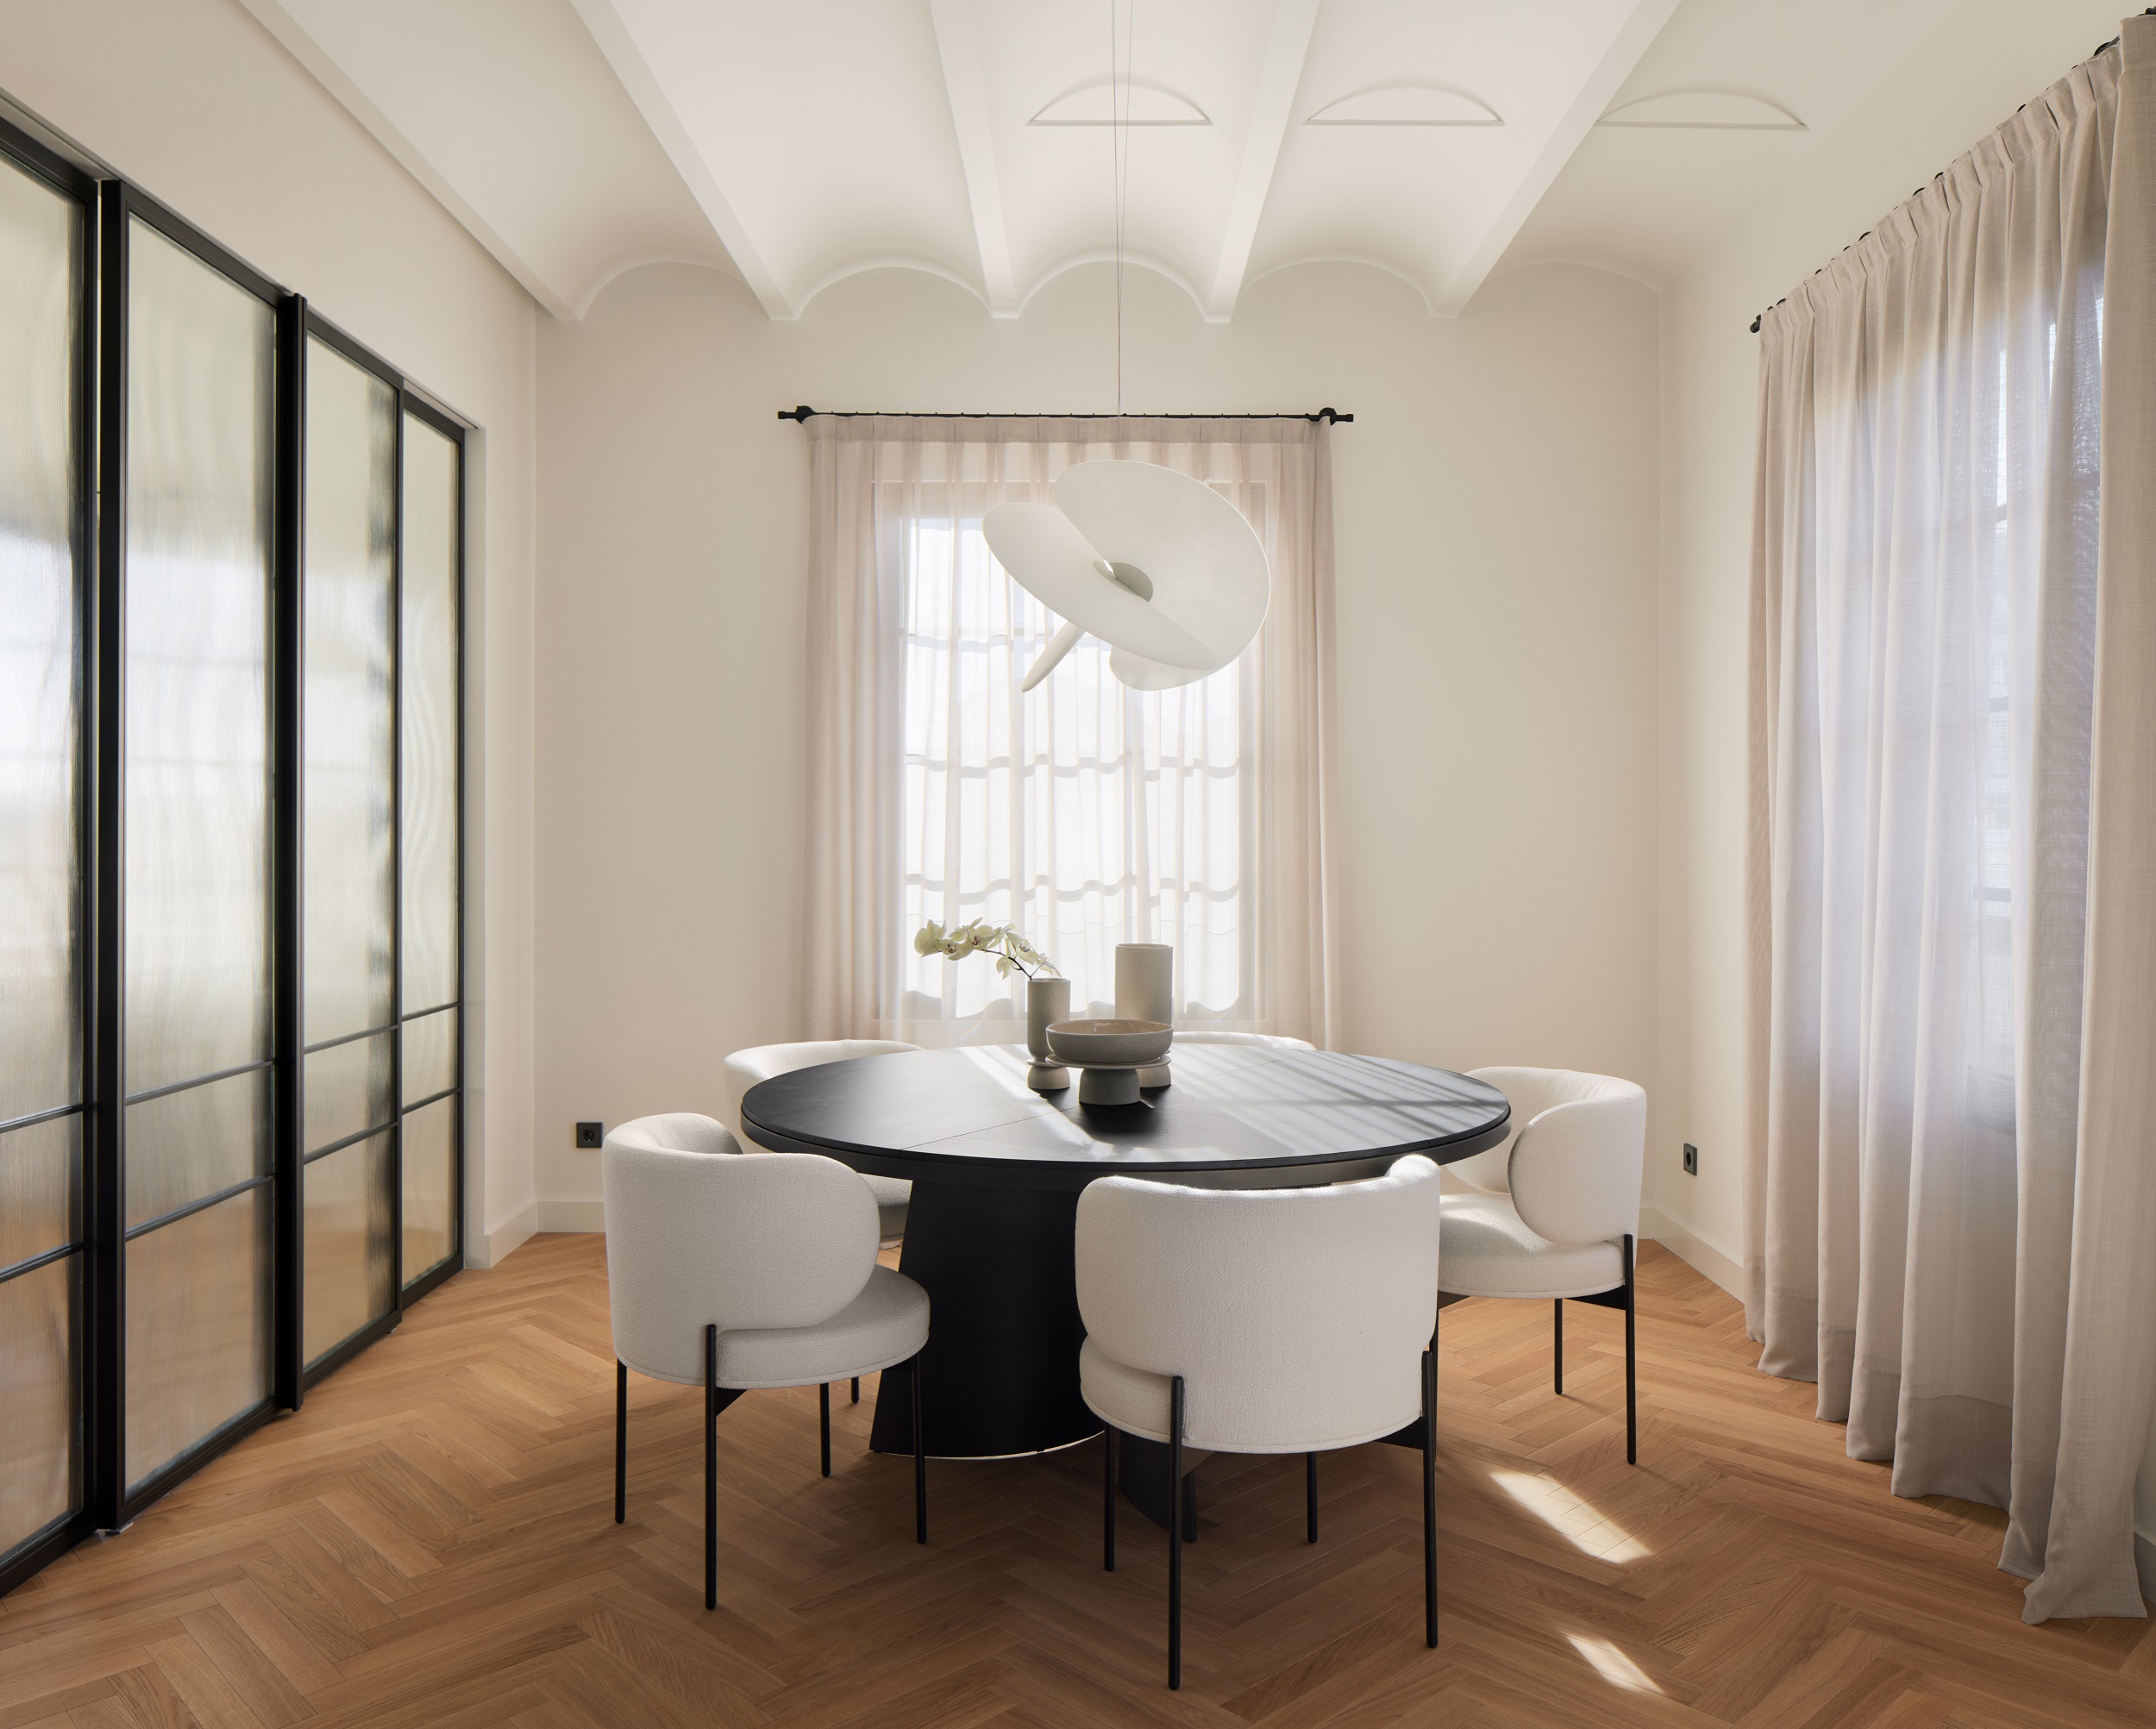 Pedralbes AV. Penthouse LUV Studio Dinning Room 2 - LUV Studio - Arquitectura y diseño - Barcelona